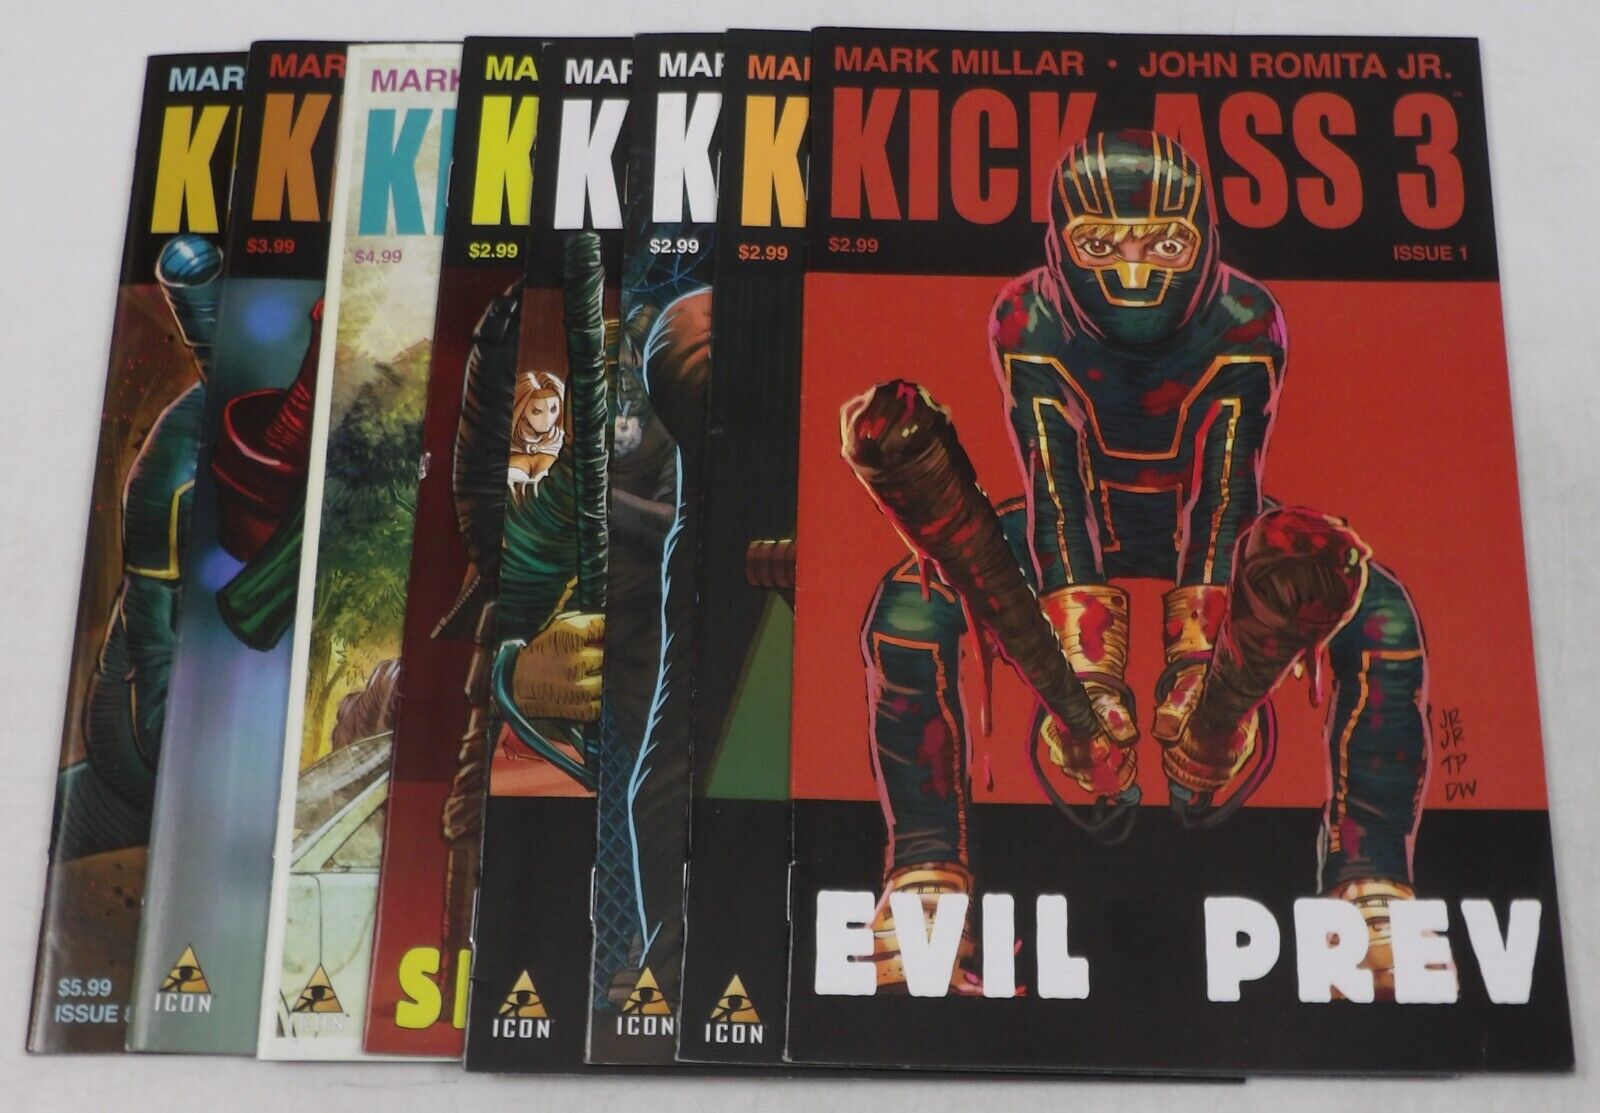 Kick-Ass 3 #1-8 VF complete series - Mark Millar - John Romita Jr - 1st print